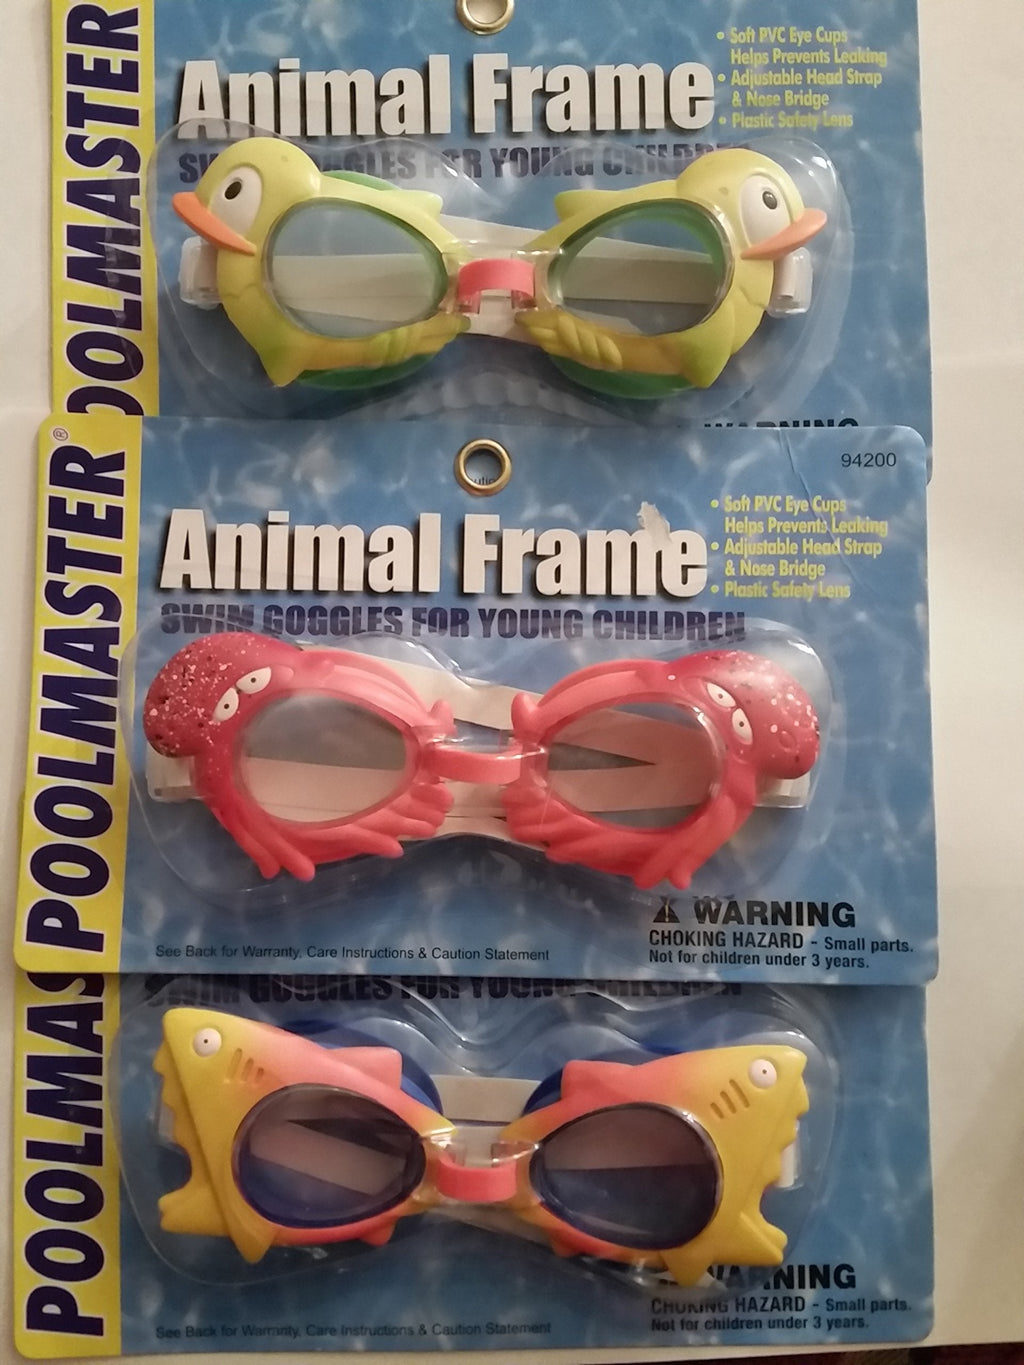 [AUSTRALIA] - Poolmaster Animal Frame Child Goggles 